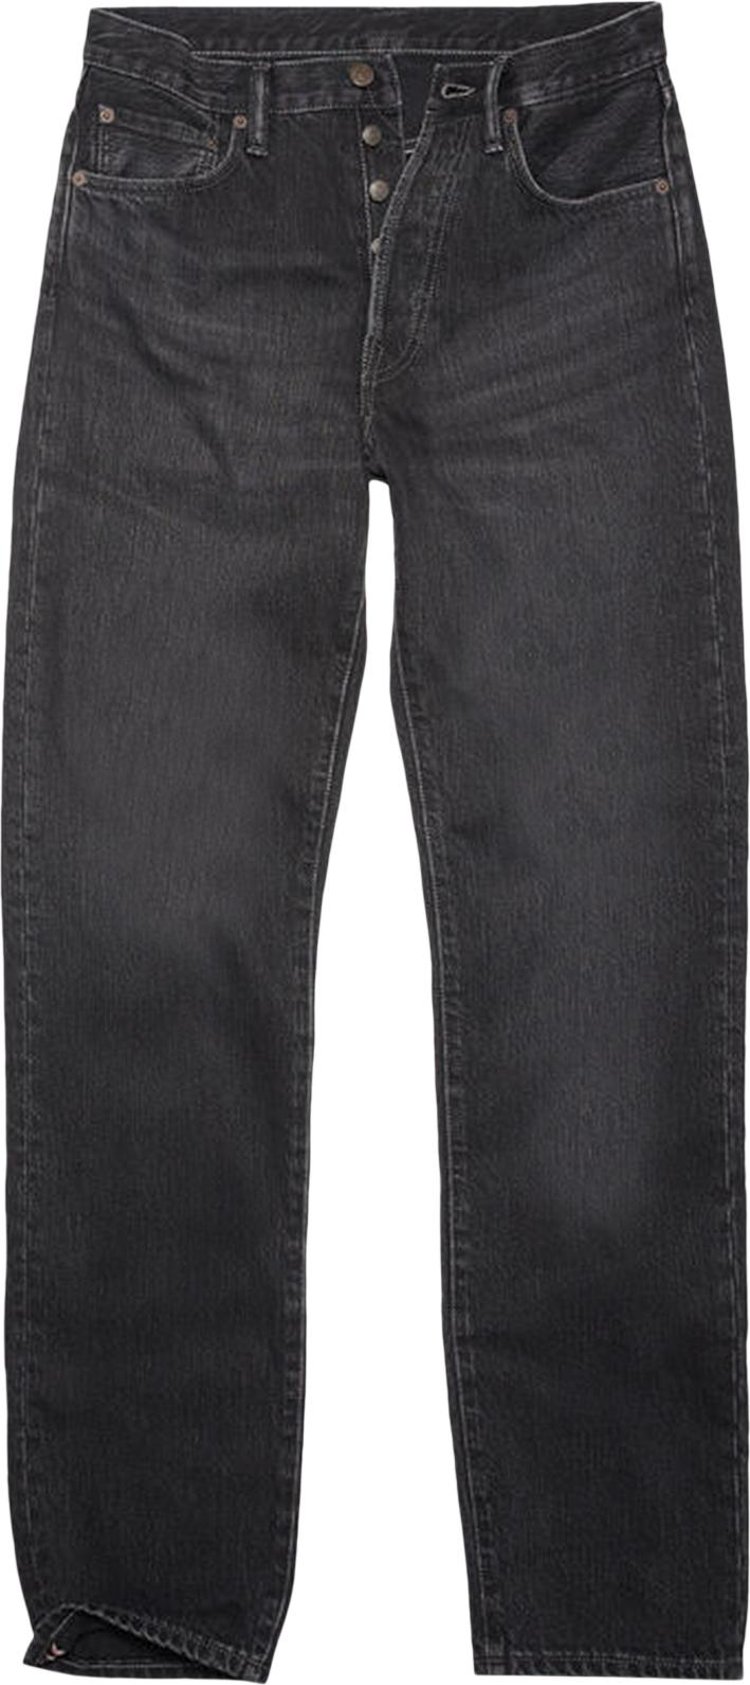 Джинсы Acne Studios Classic Fit Jeans 'Black', черный джинсы acne studios classic fit jeans black черный